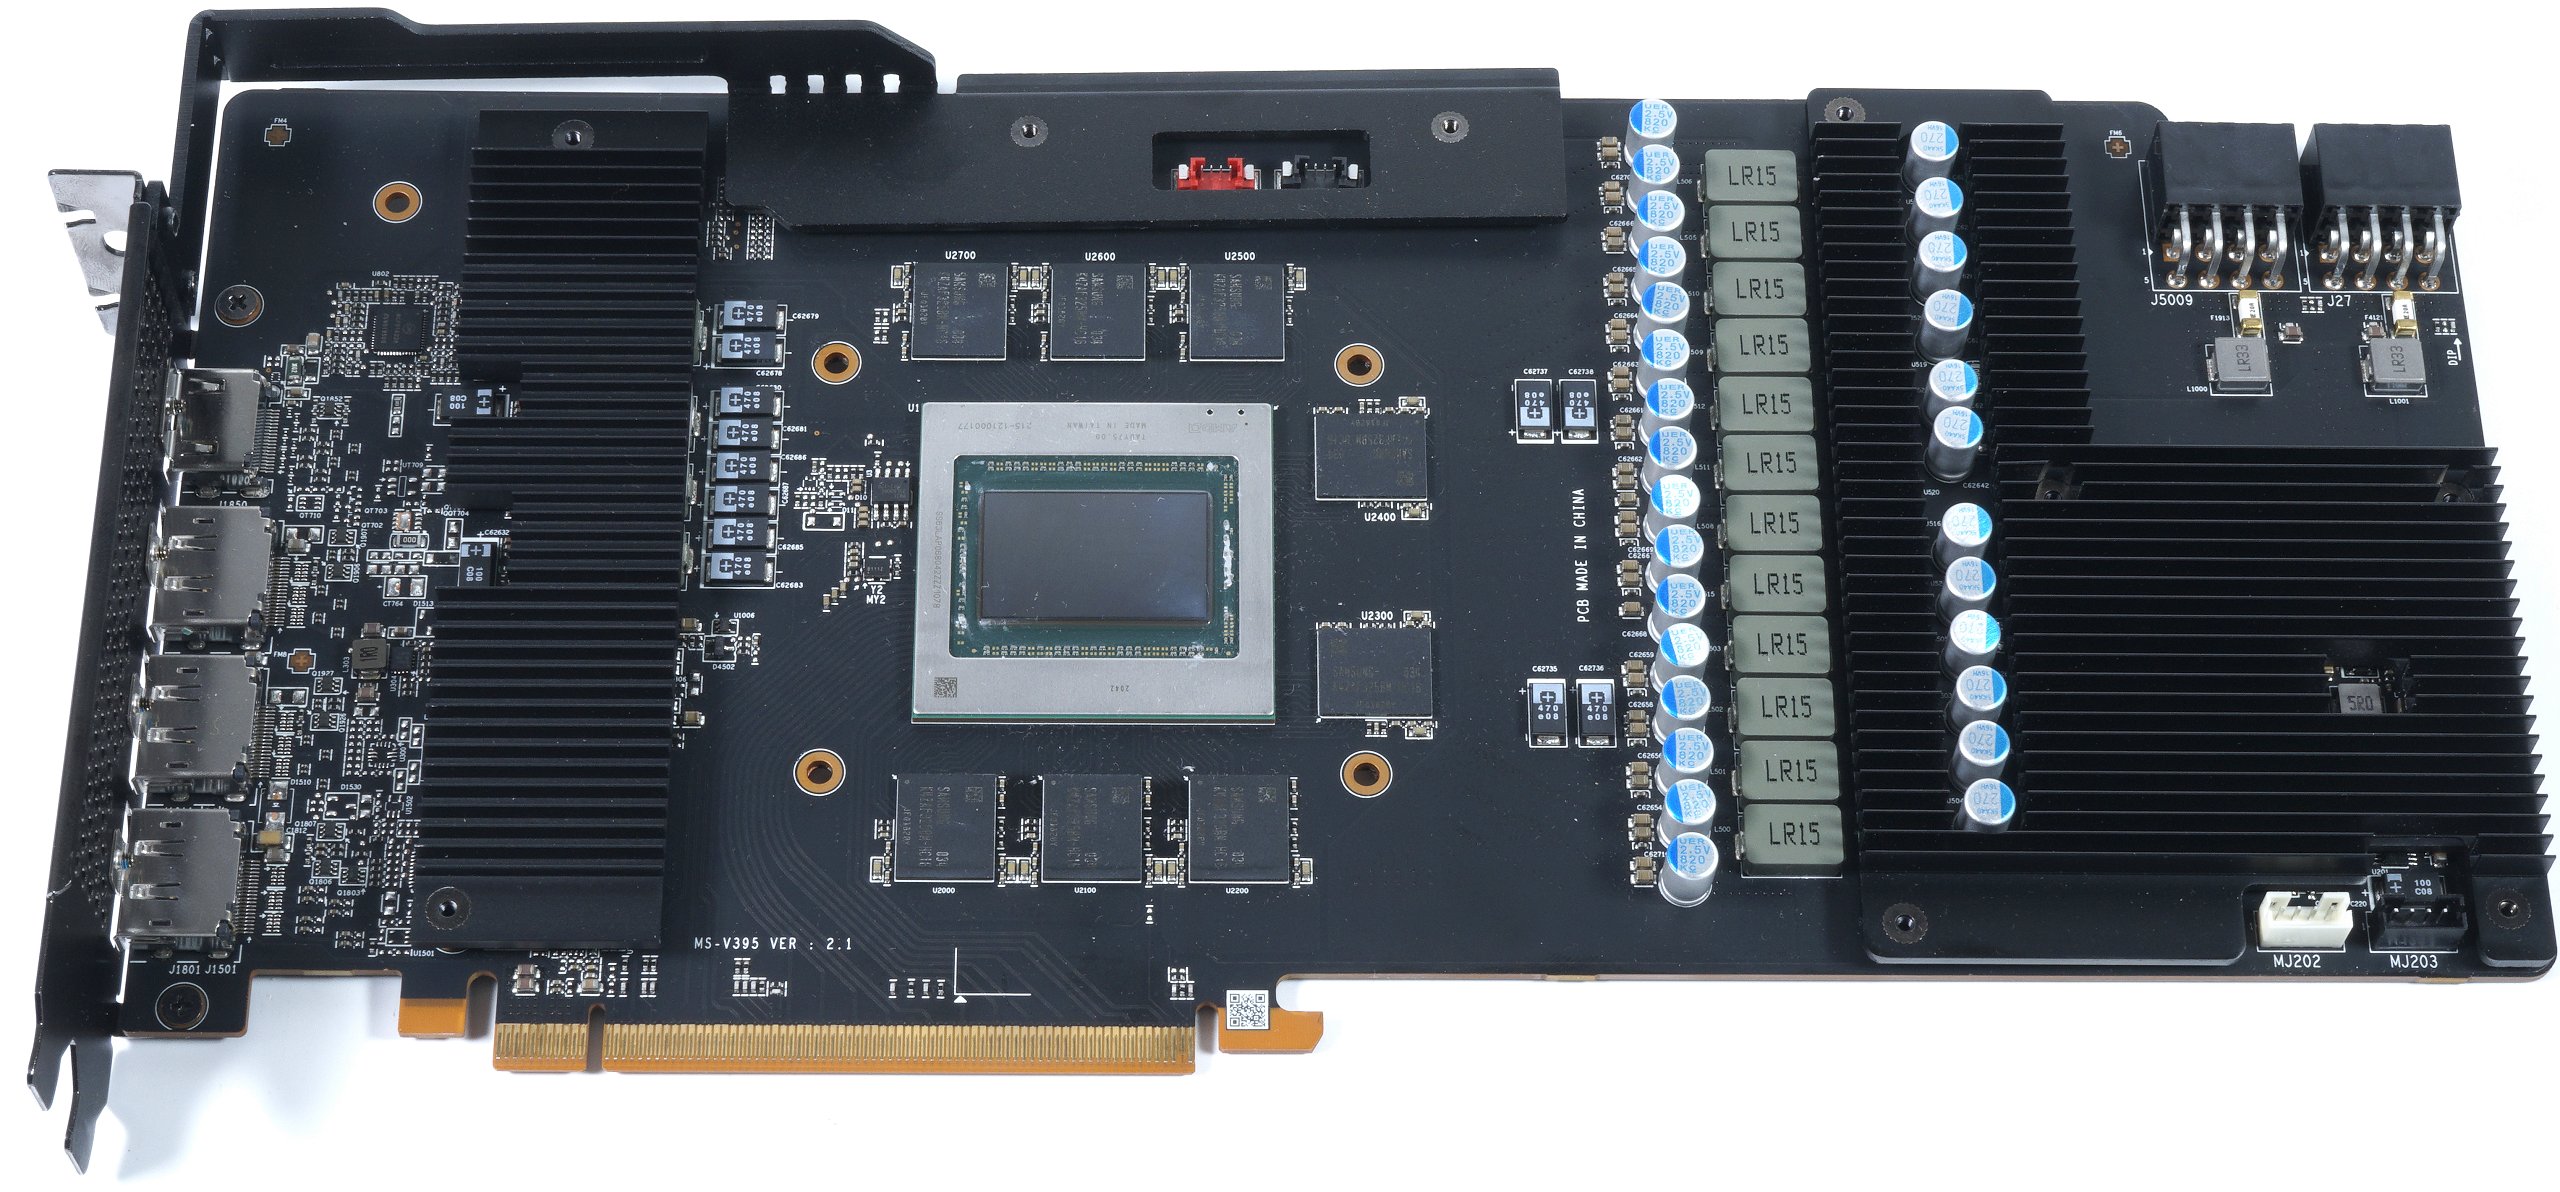 MSI Radeon RX 6800 XT Gaming X Trio Review - Circuit Board Analysis